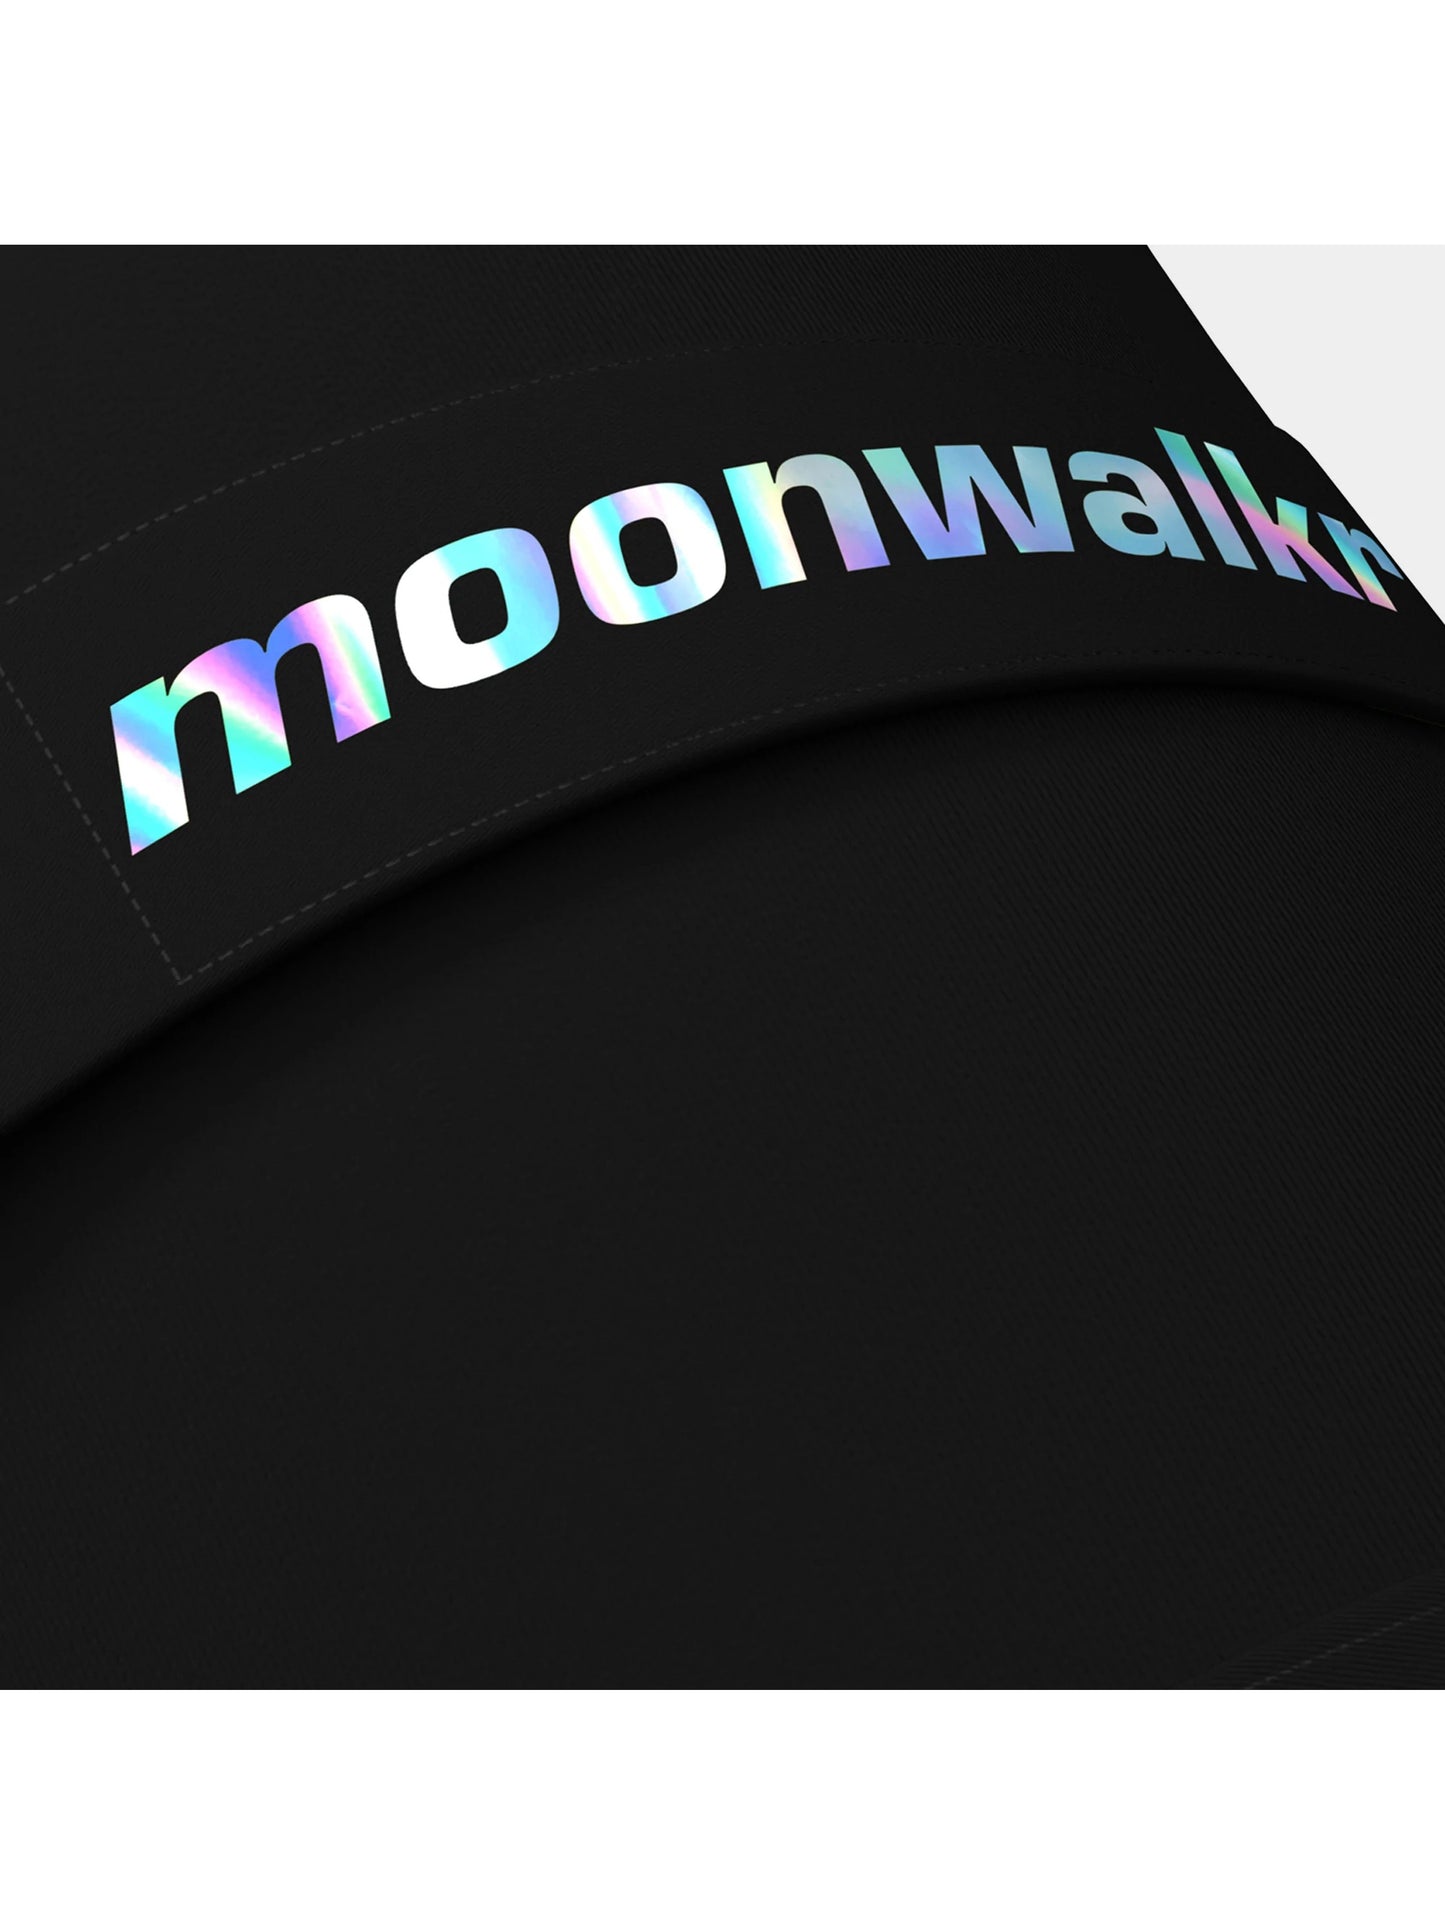 MoonWalkr 2.0 Thigh Pads